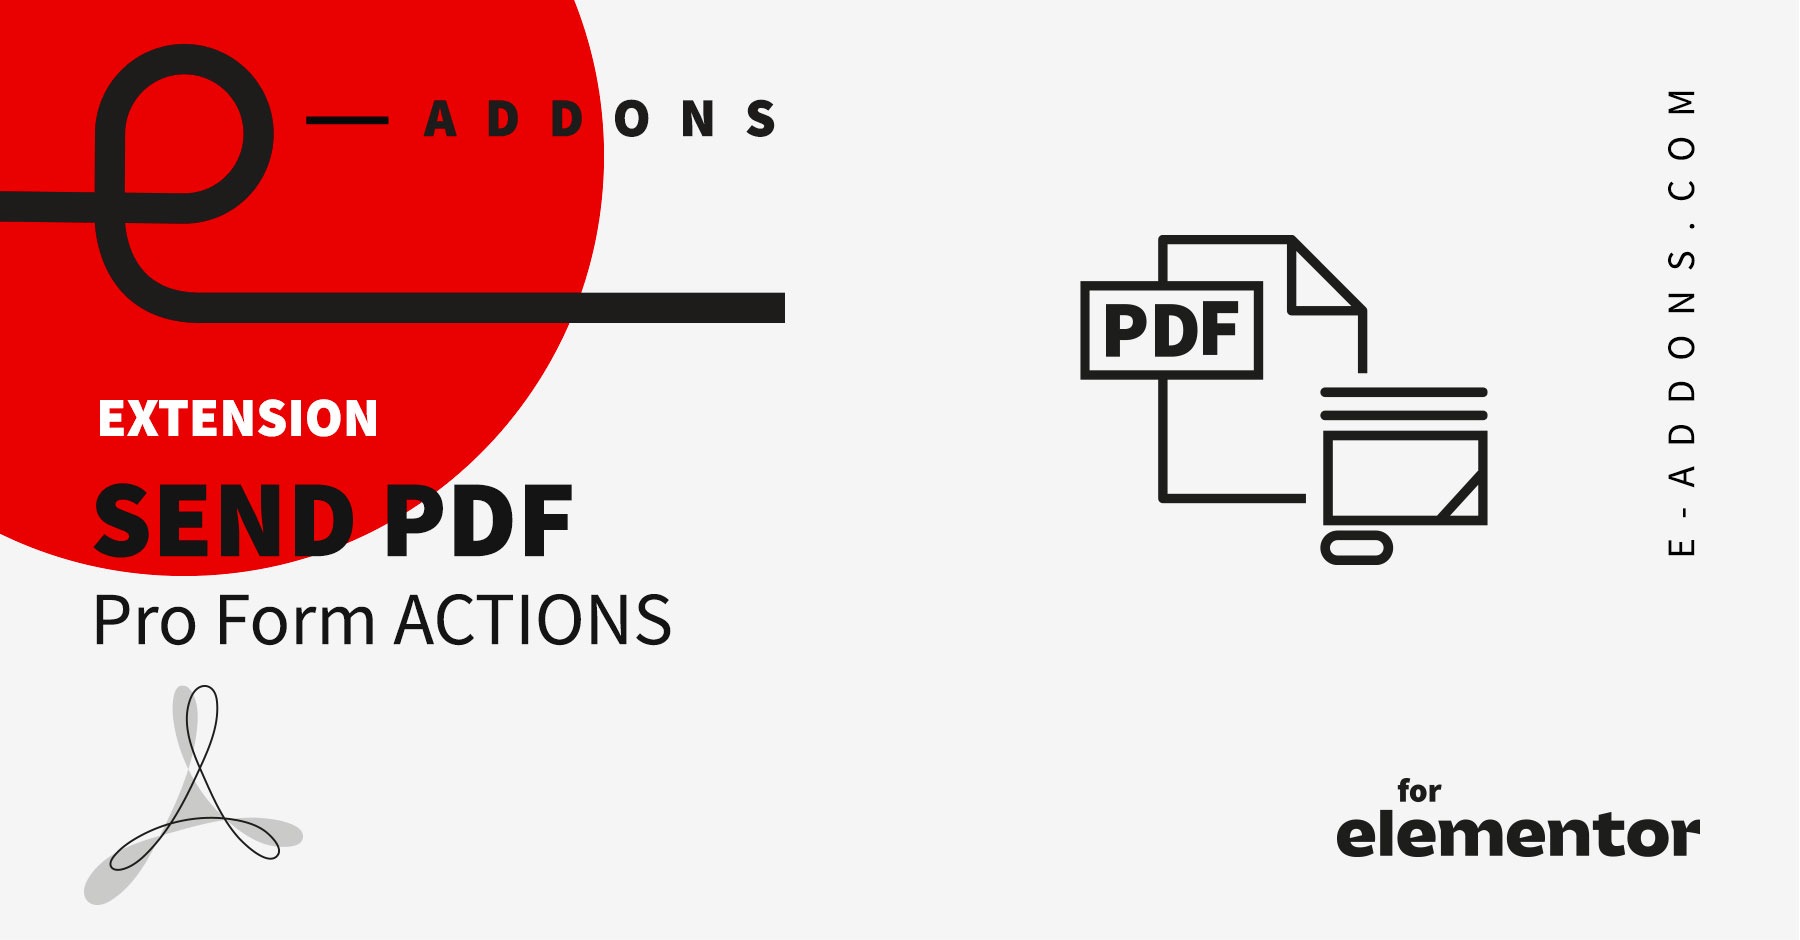 e-addons PDF Pro-Form Generator